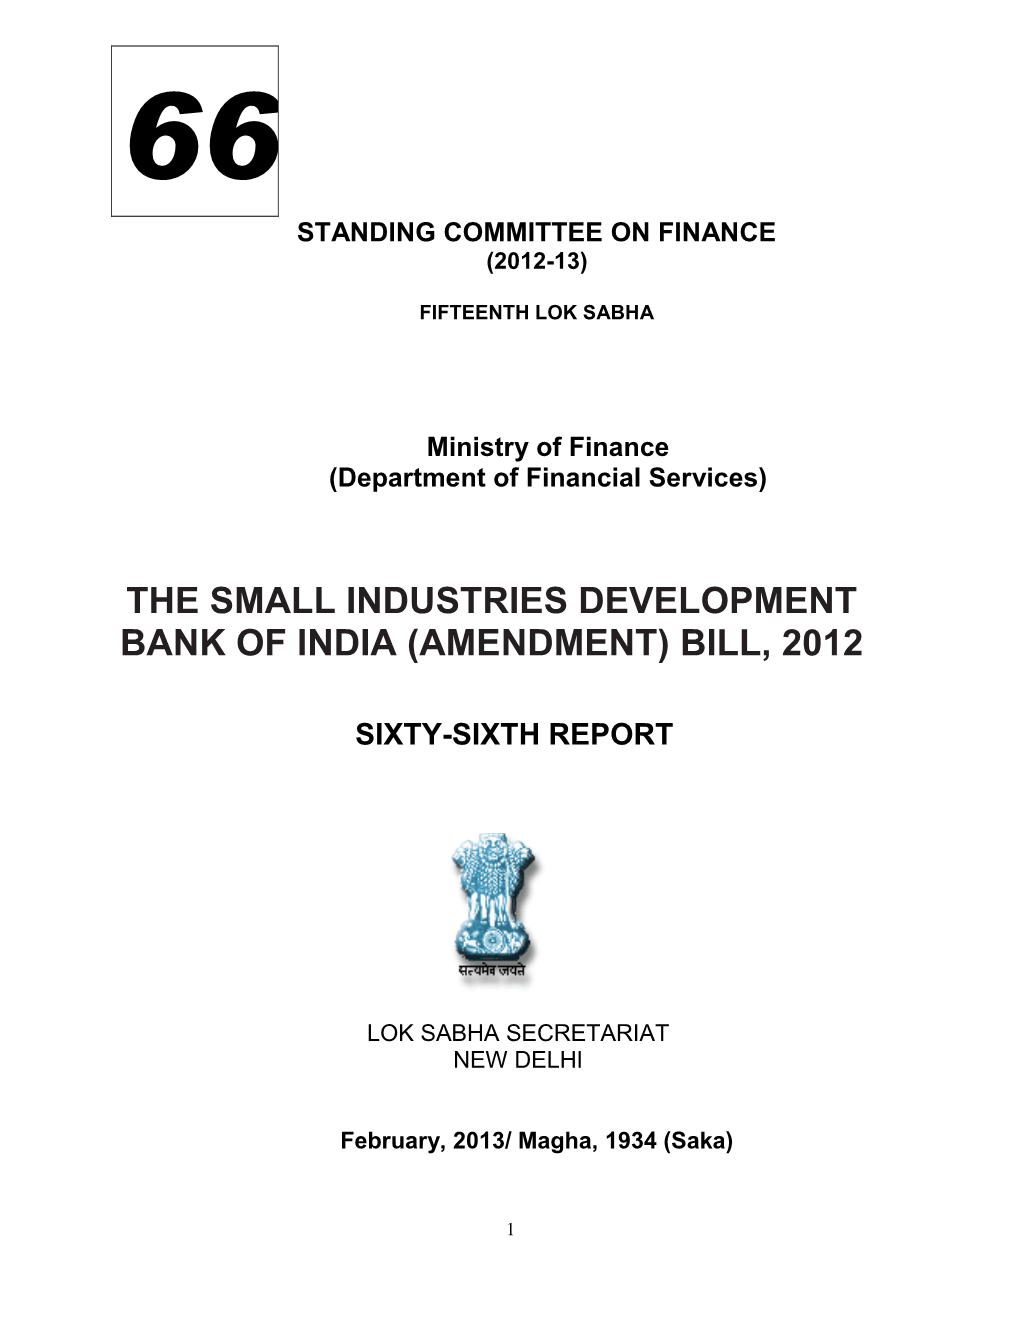 The Small Industries Development Bank of India (Amendment) Bill, 2012